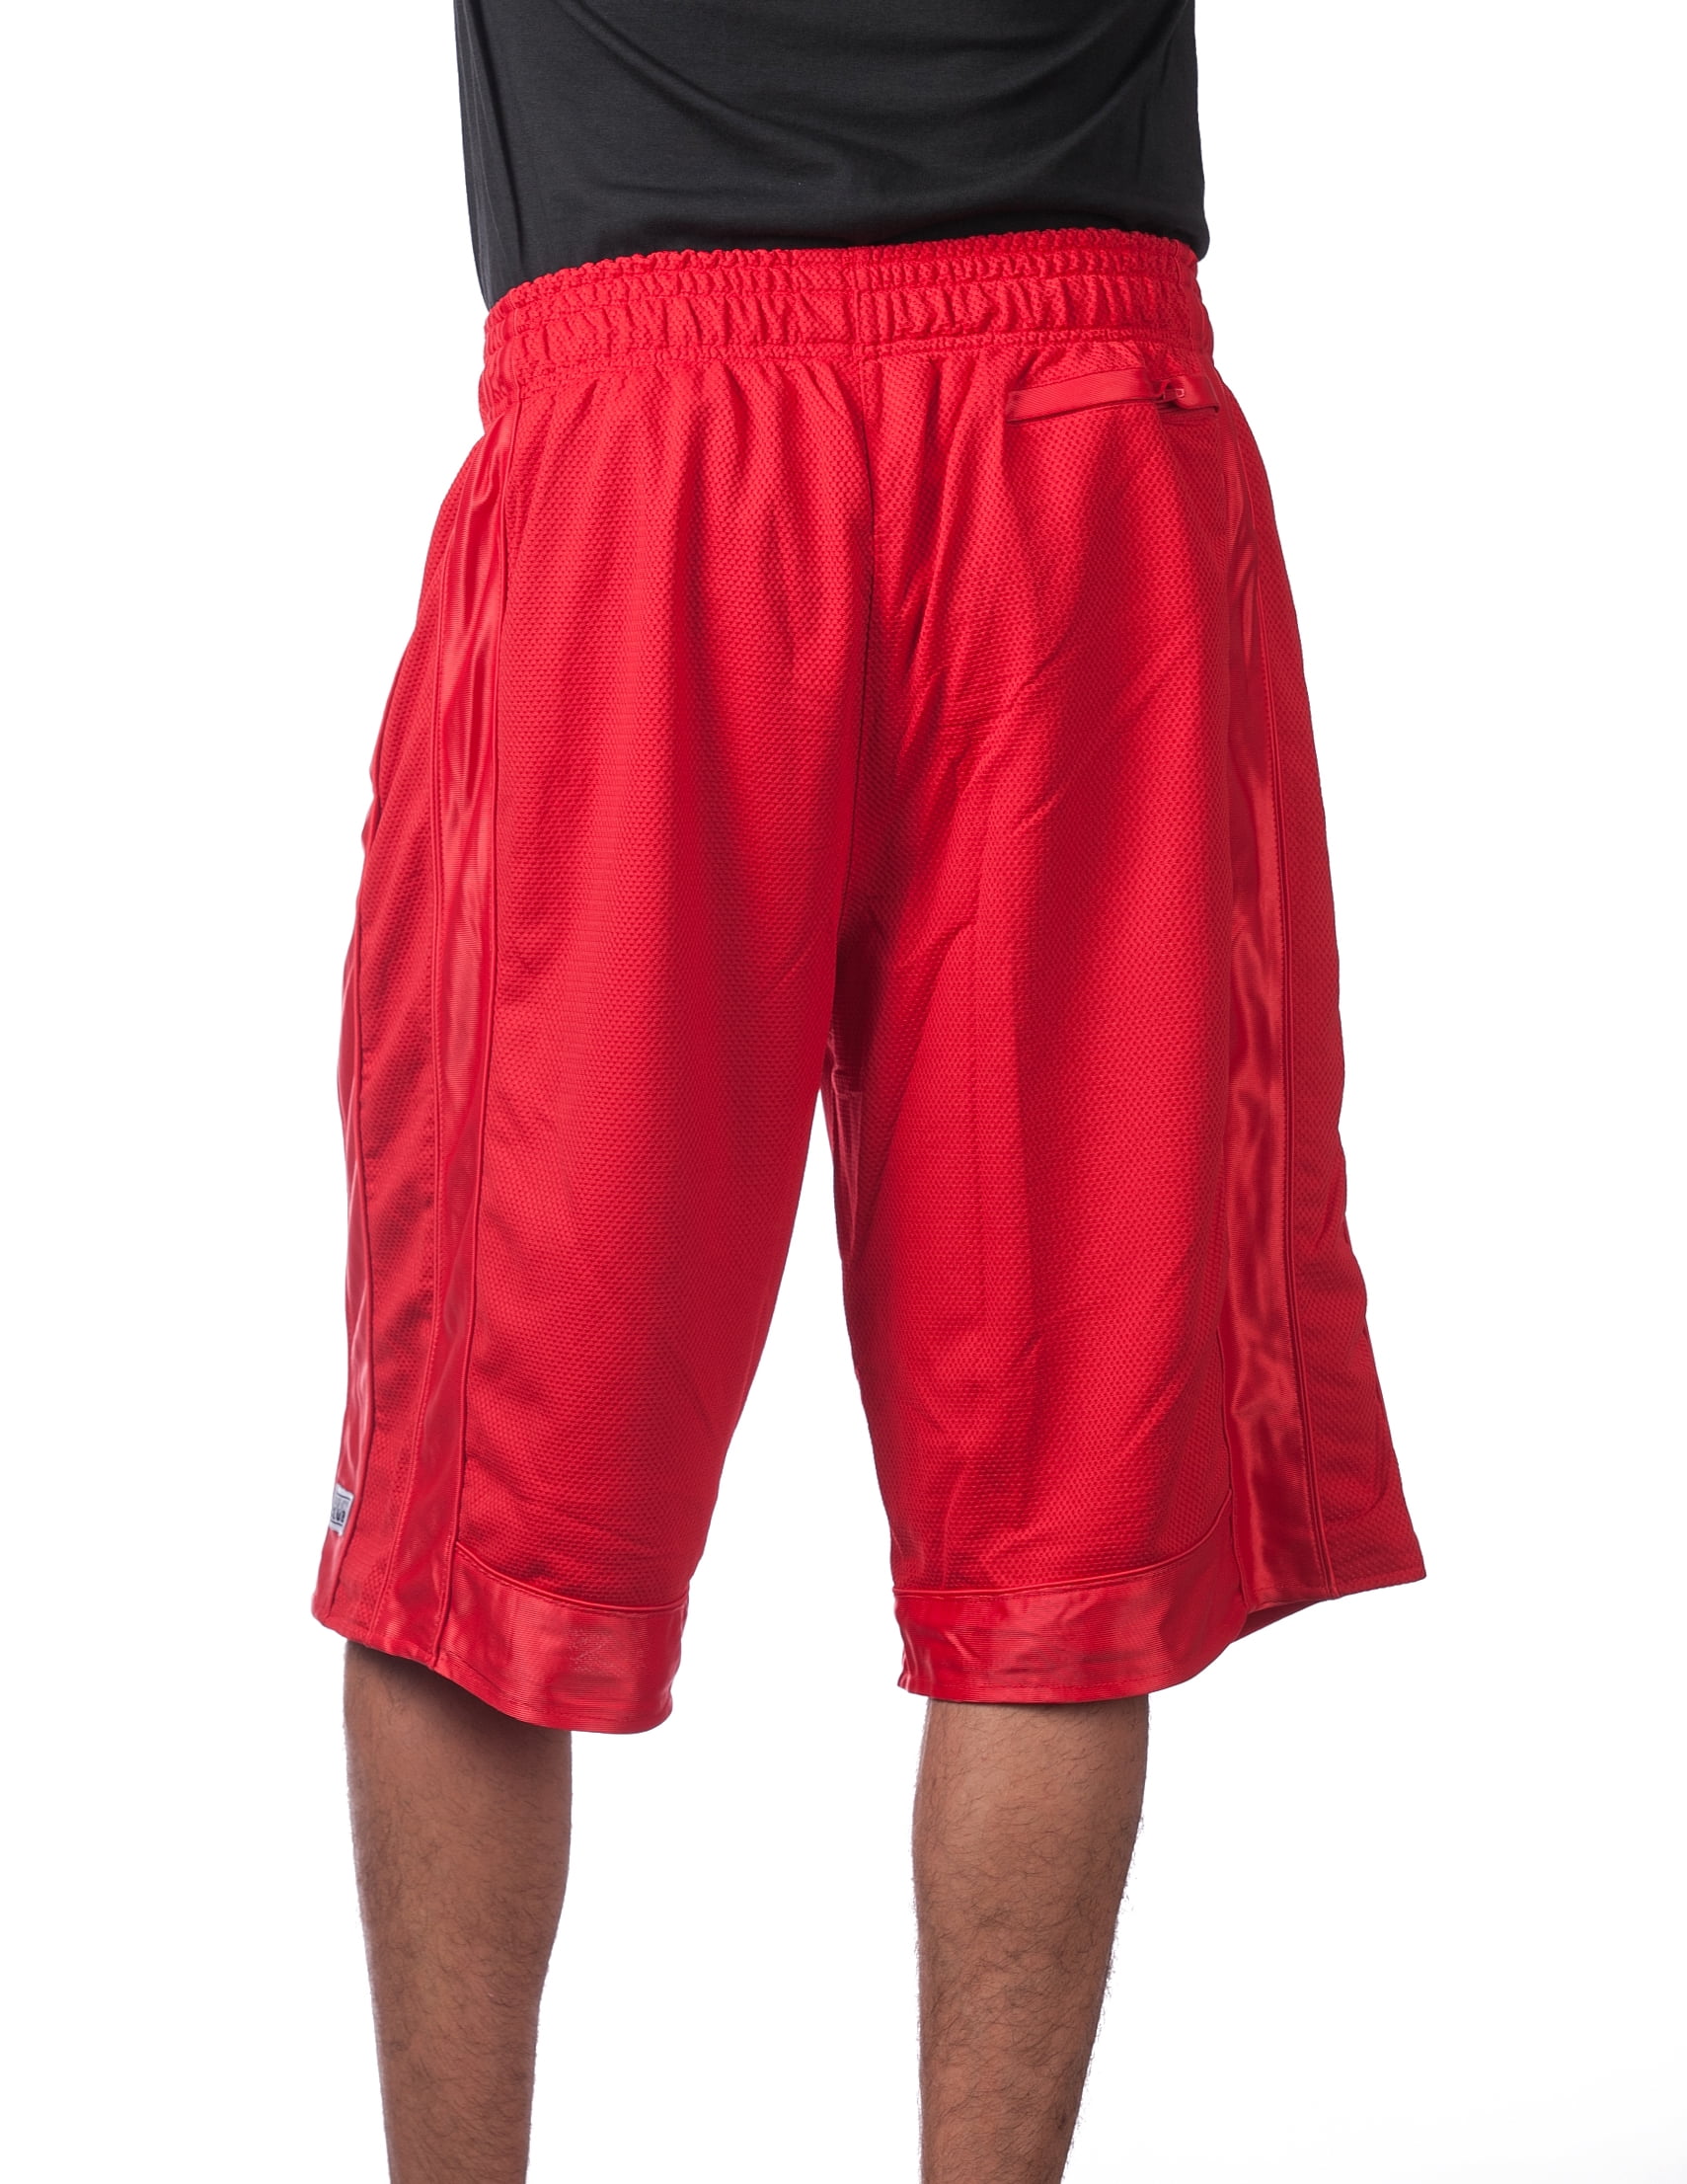 Pro Club Men's Heavyweight Mesh Basketball Shorts Charcoal / Large